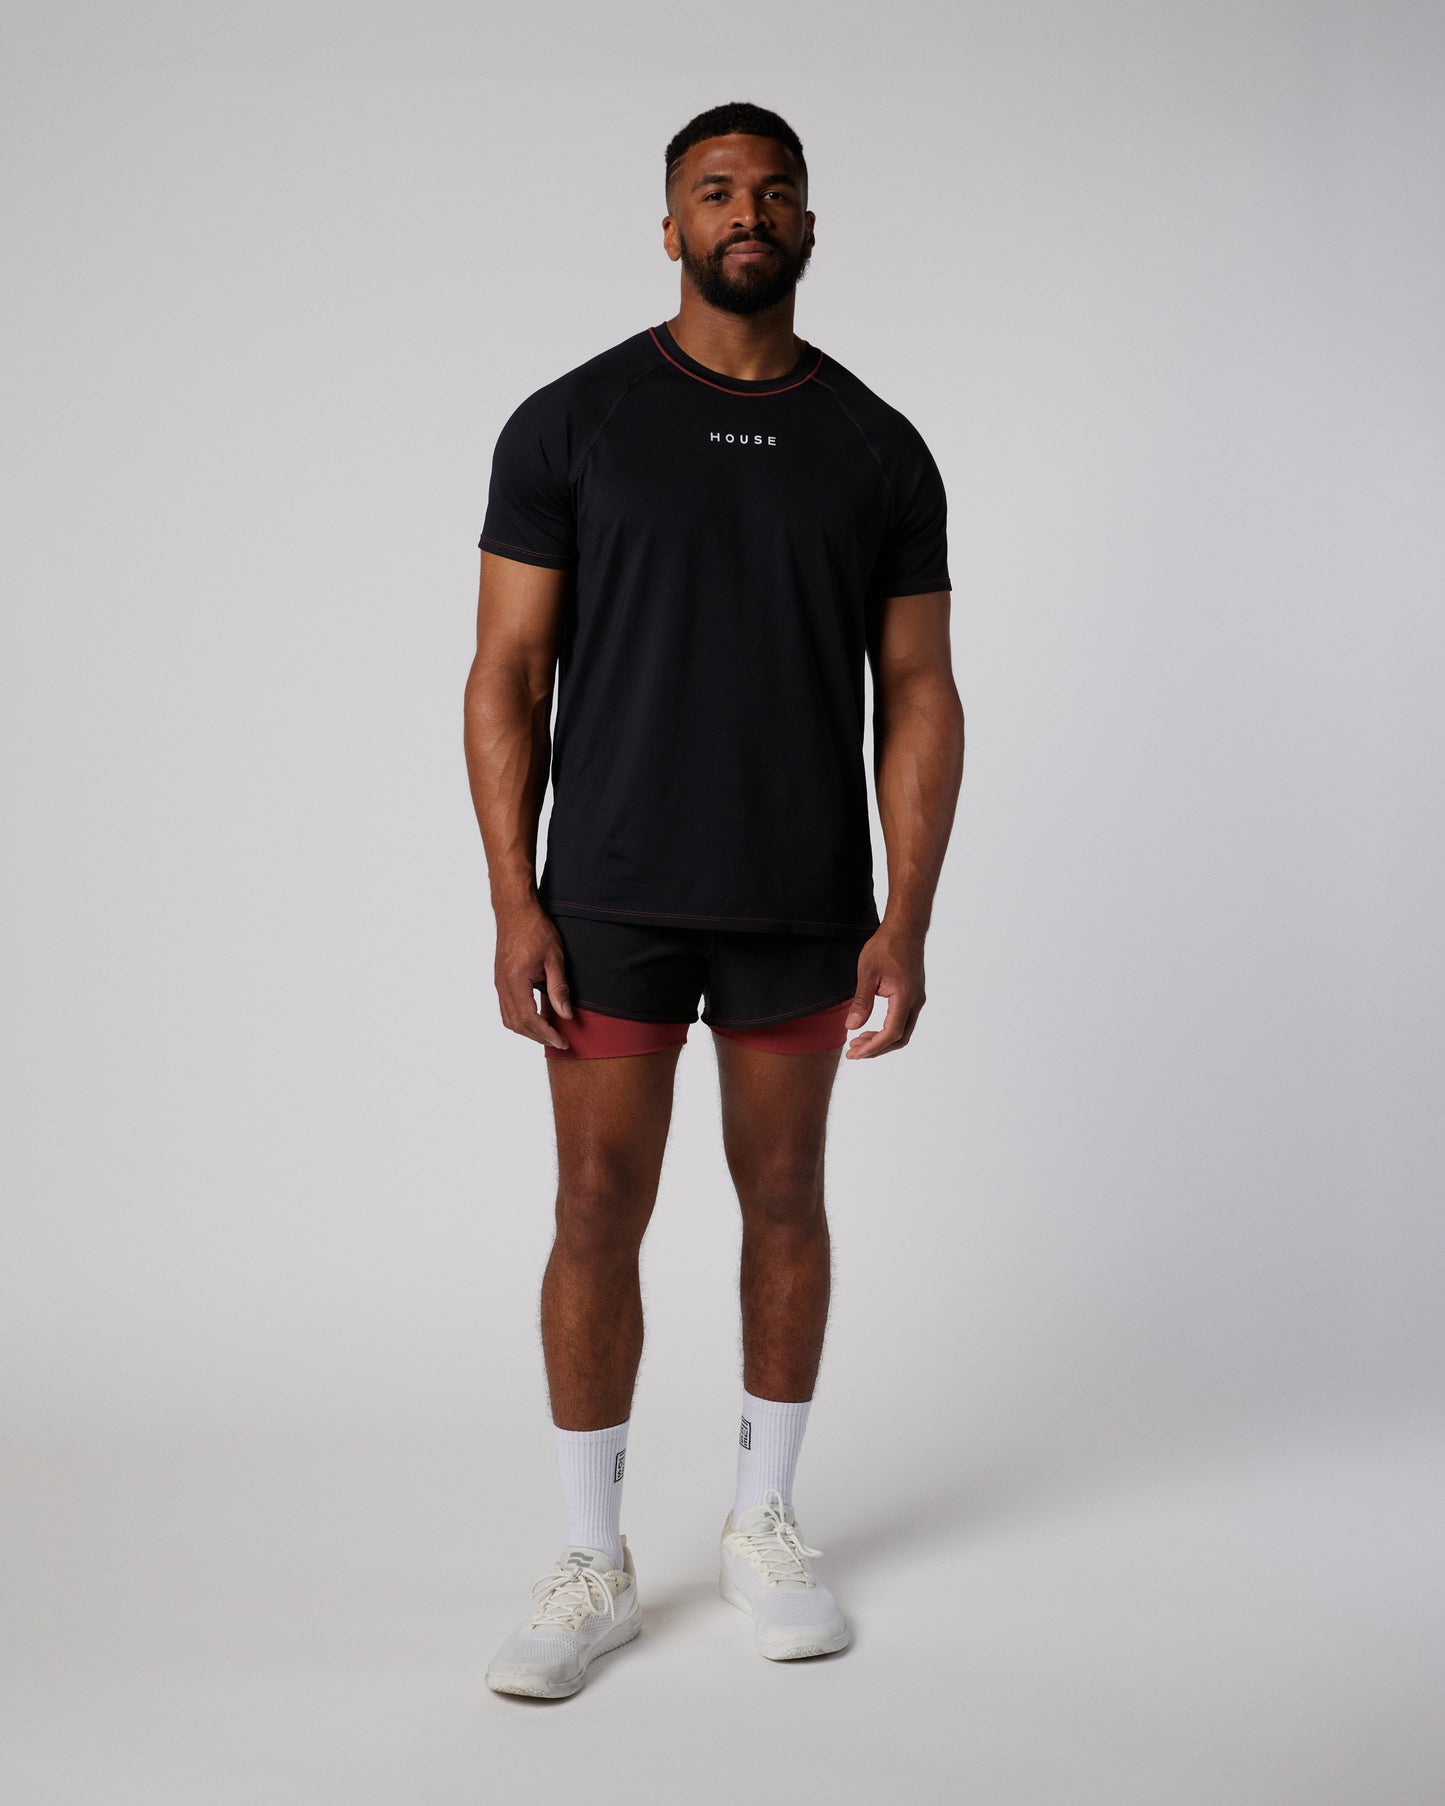 Mens athletic gym t-shirt in black